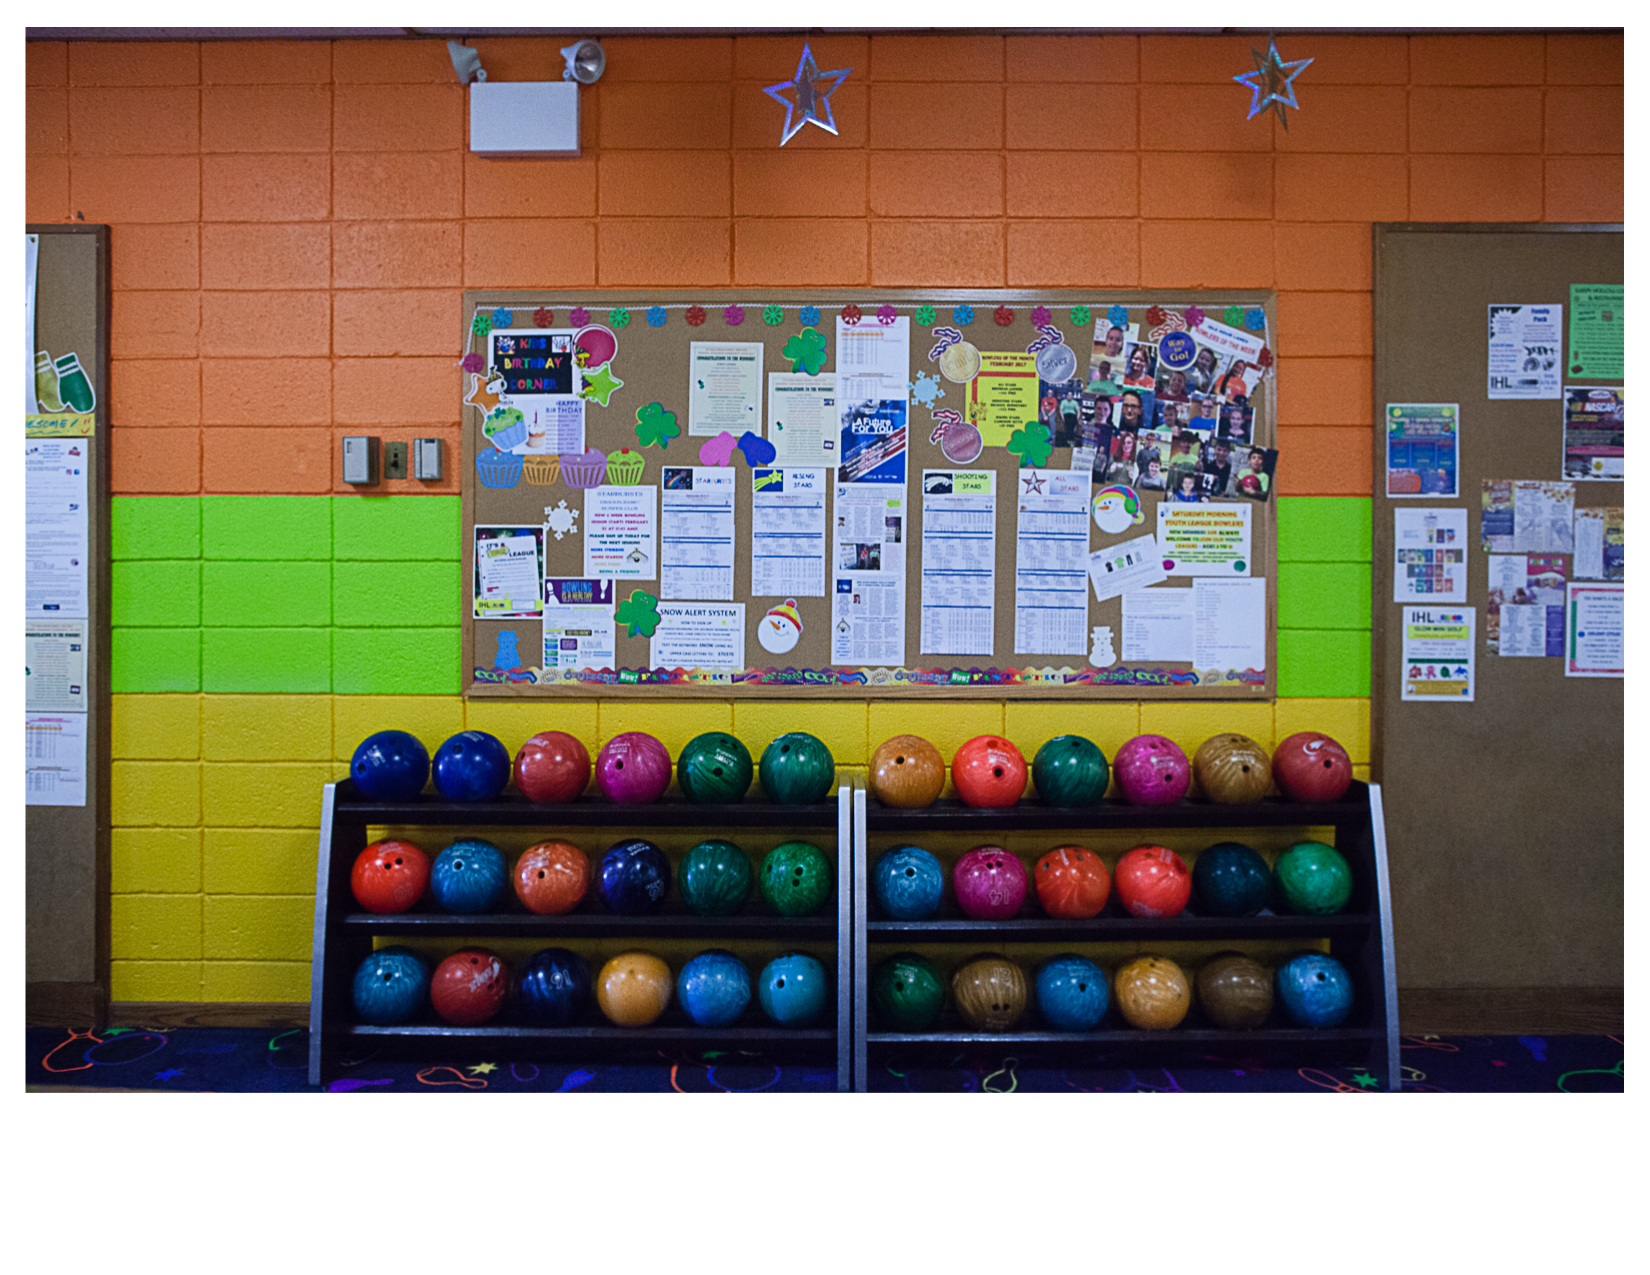 Bowling Balls and Bulletin Board, Idle Hour Lanes, Scranton, PA